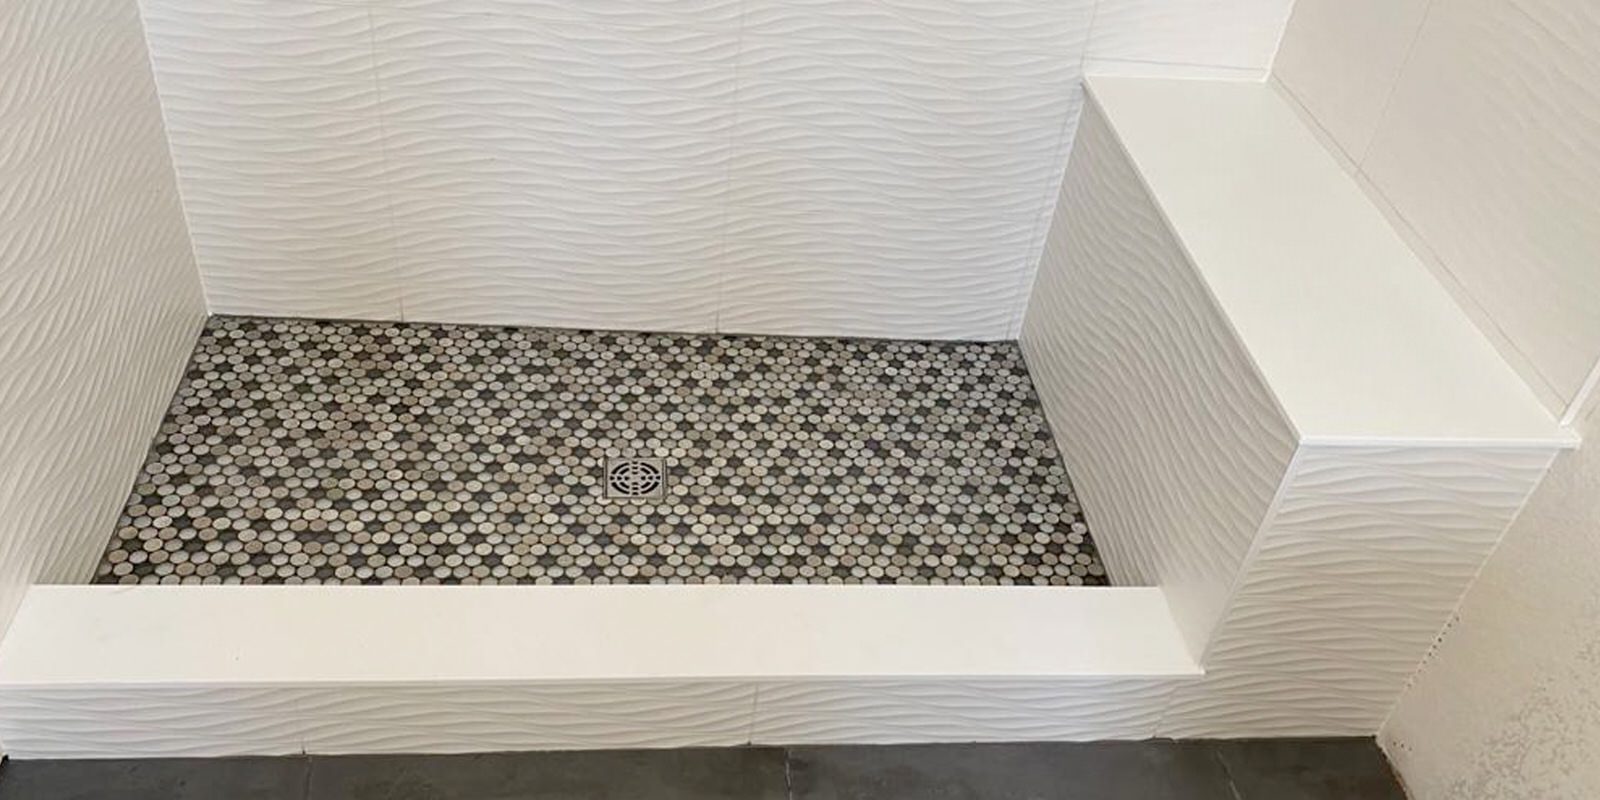 Tile flooring installation in bathroom in denver metro area - extreme flooring